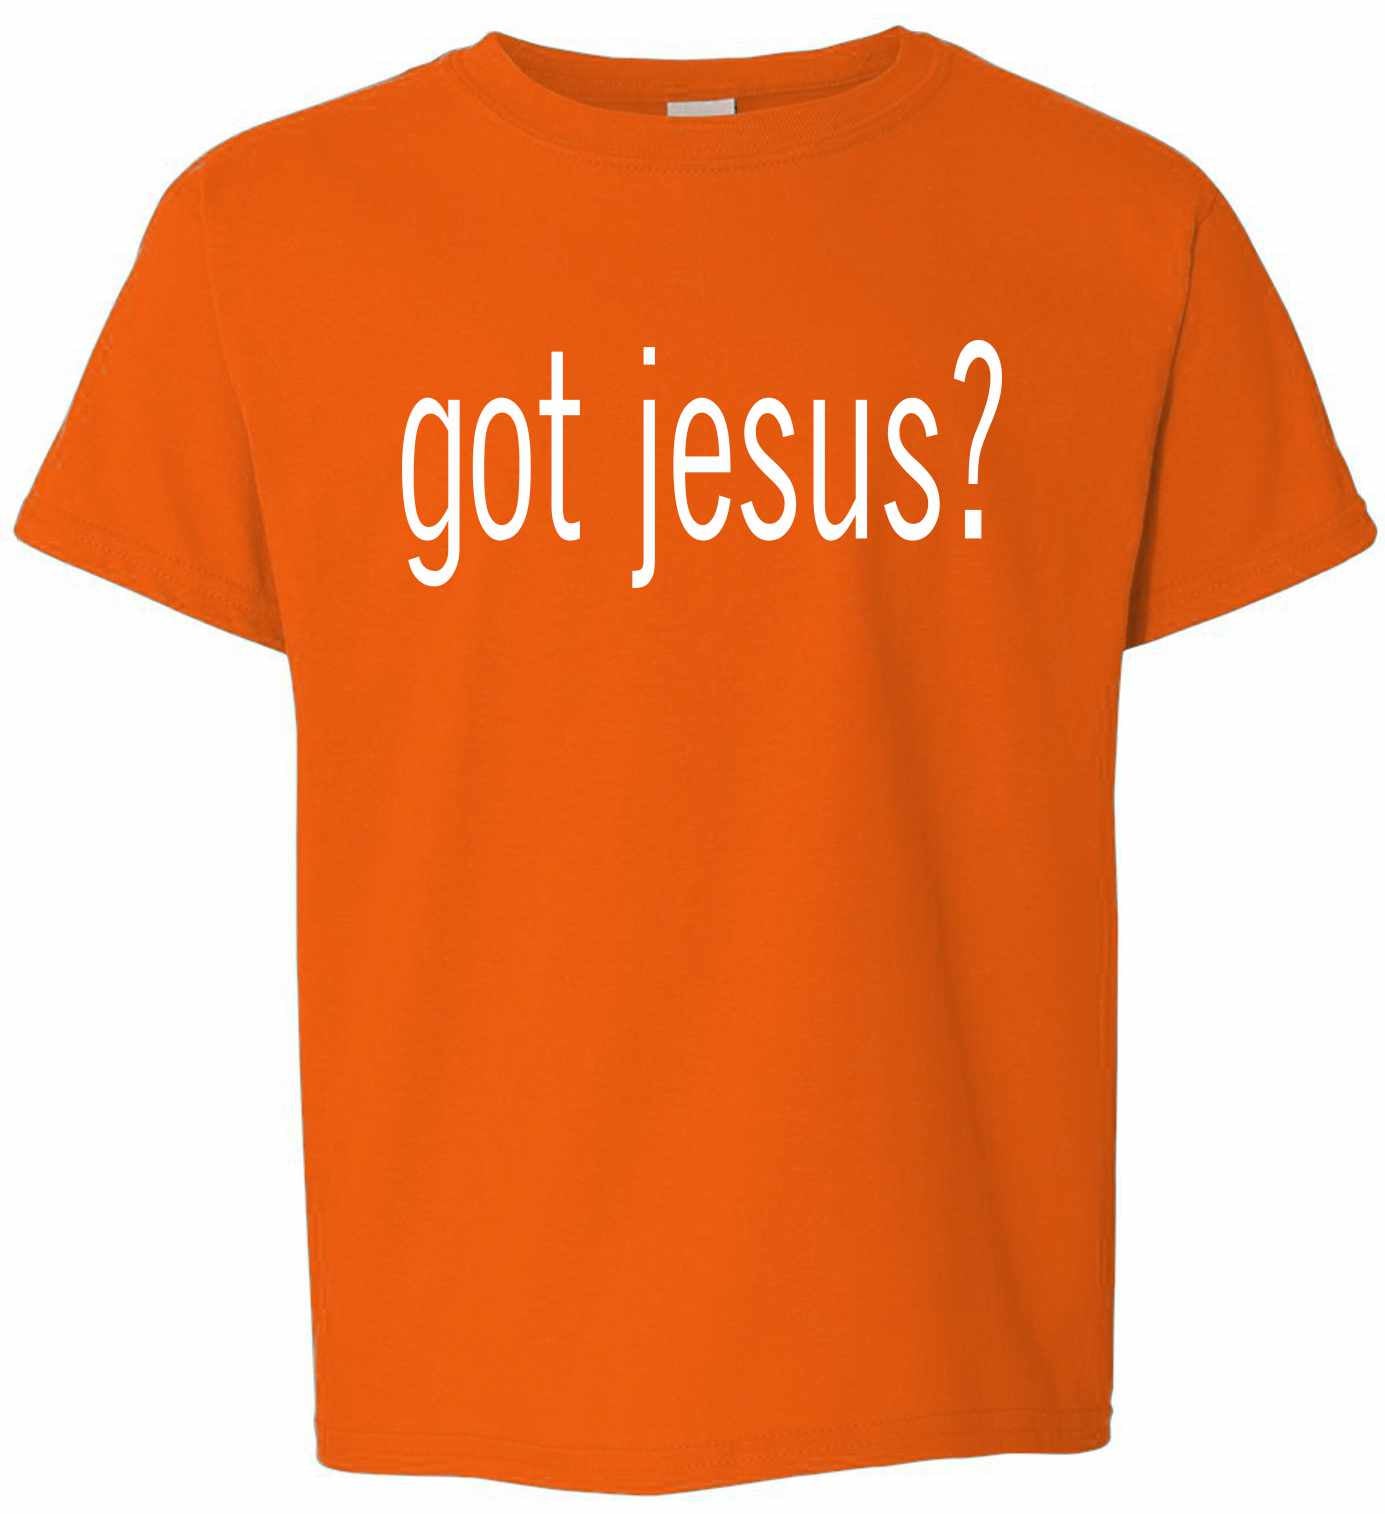 Got Jesus on Kids T-Shirt (#79-201)